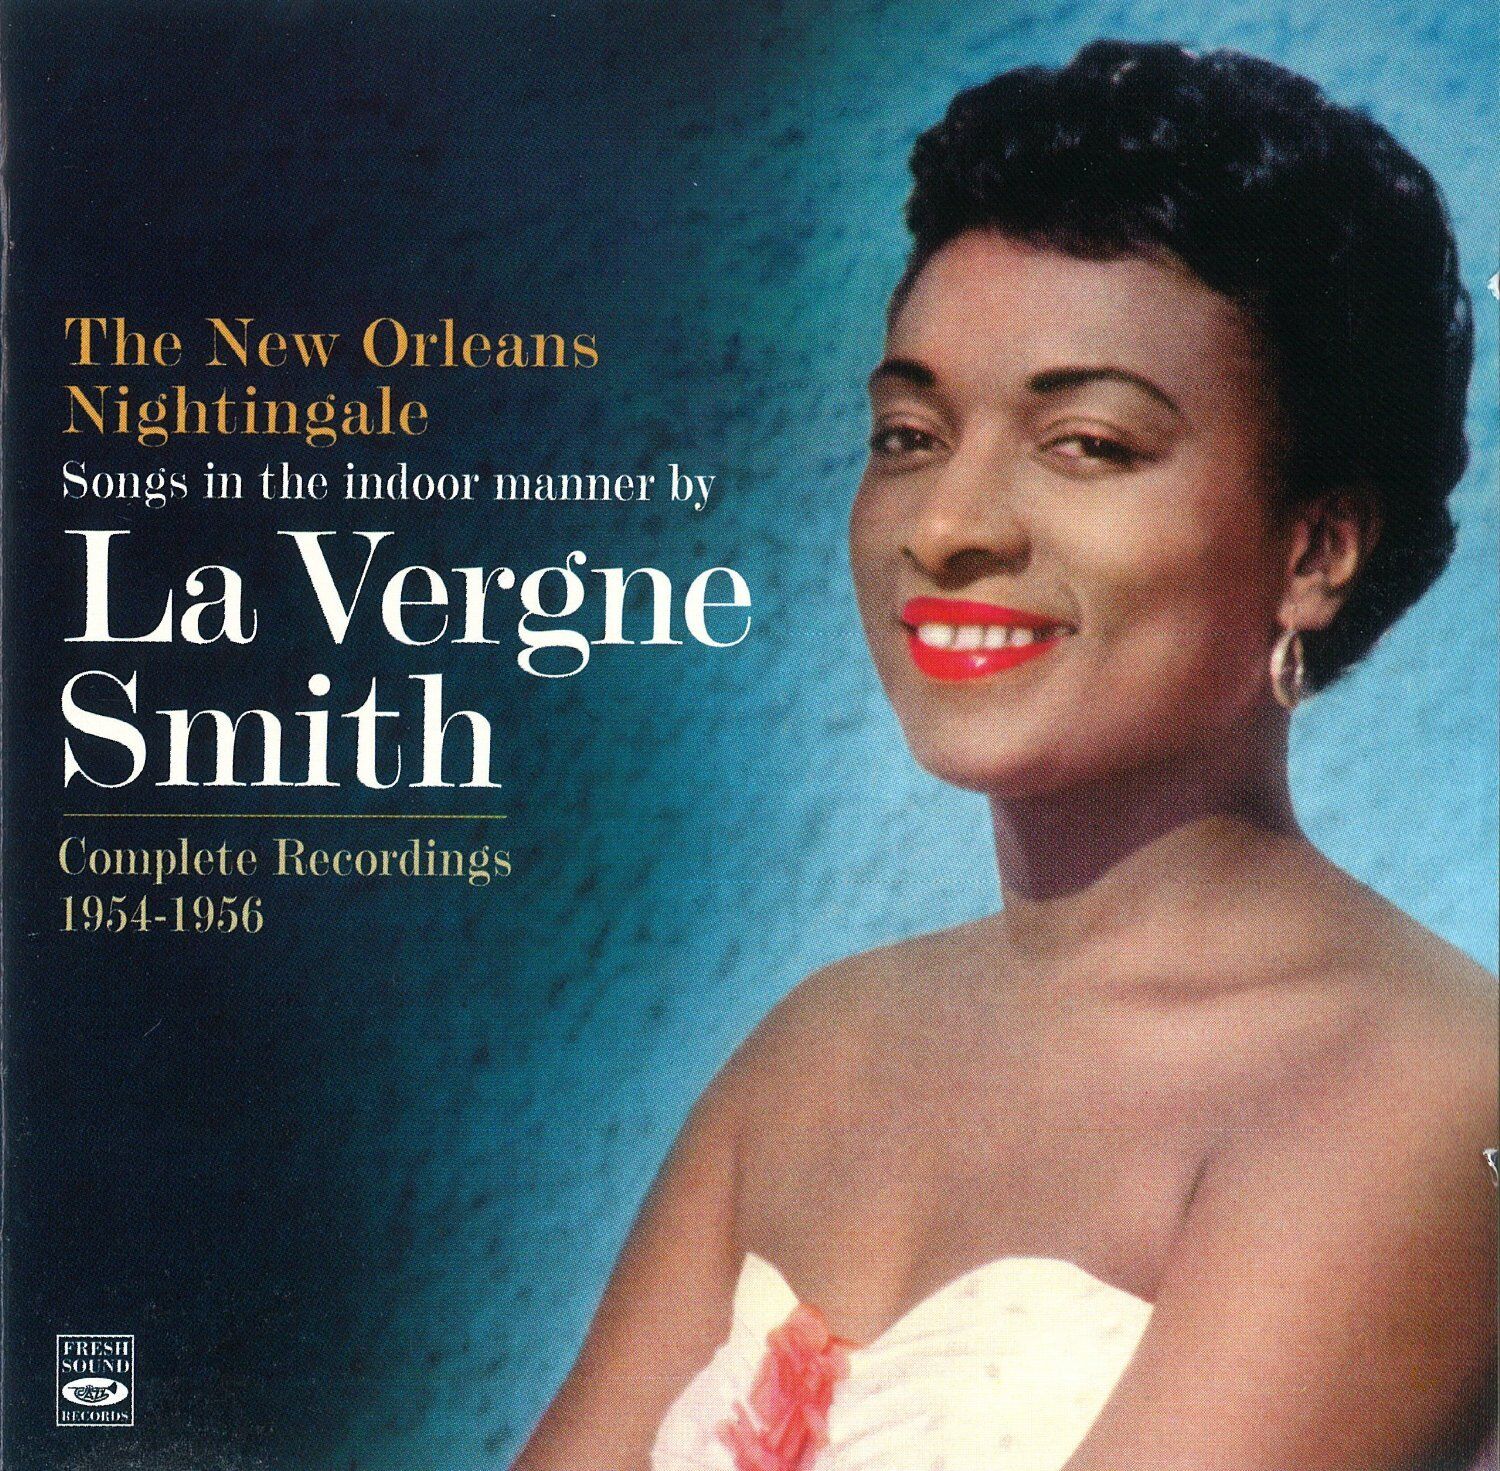 La Vergne Smith: The New Orleans Nightingale - Complete Recordings 1954-1956 